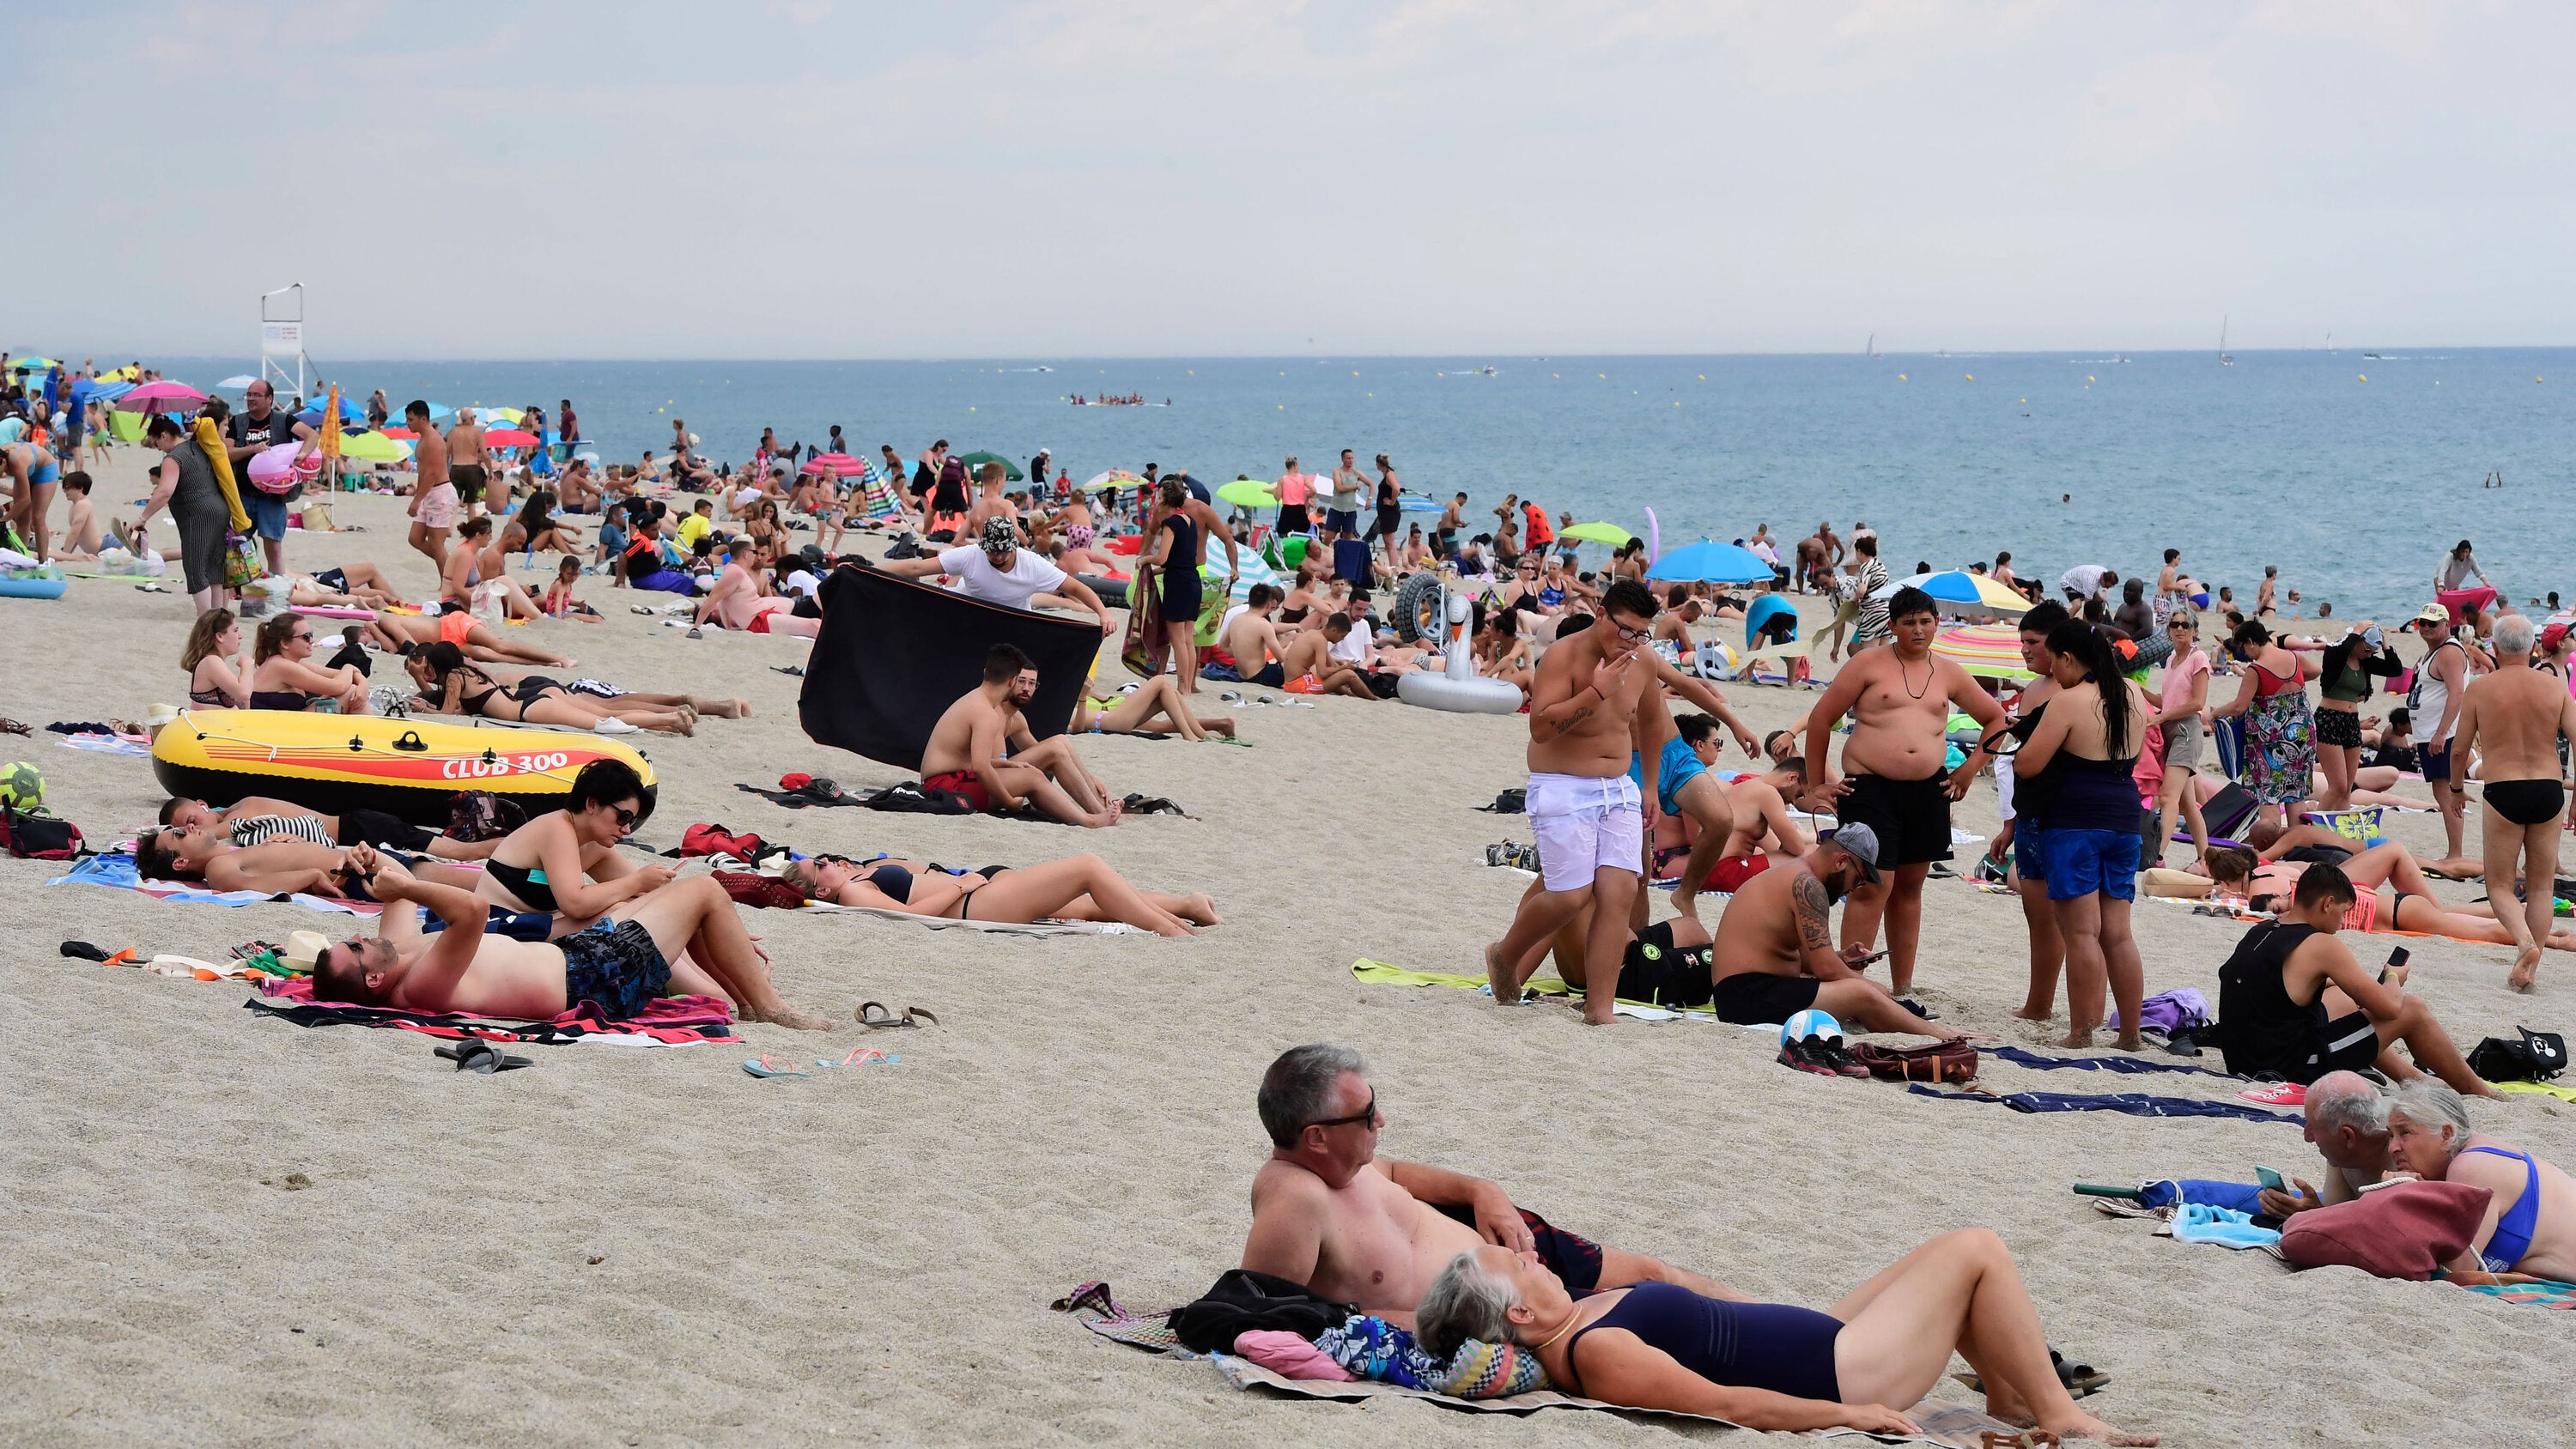 aleksandar sale zivkovic share show me naked women on the beach photos